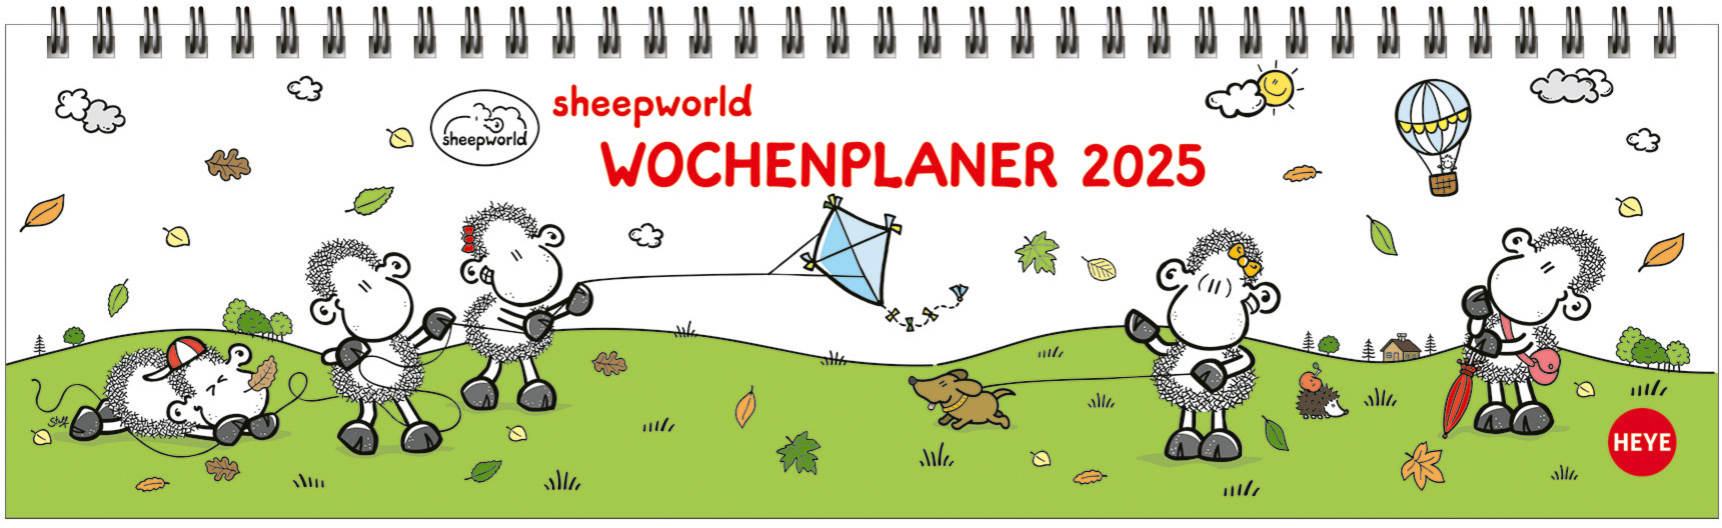 HEYE Wochenplaner Sheepworld 2025 21742+25 DE 32.5x9.3cm